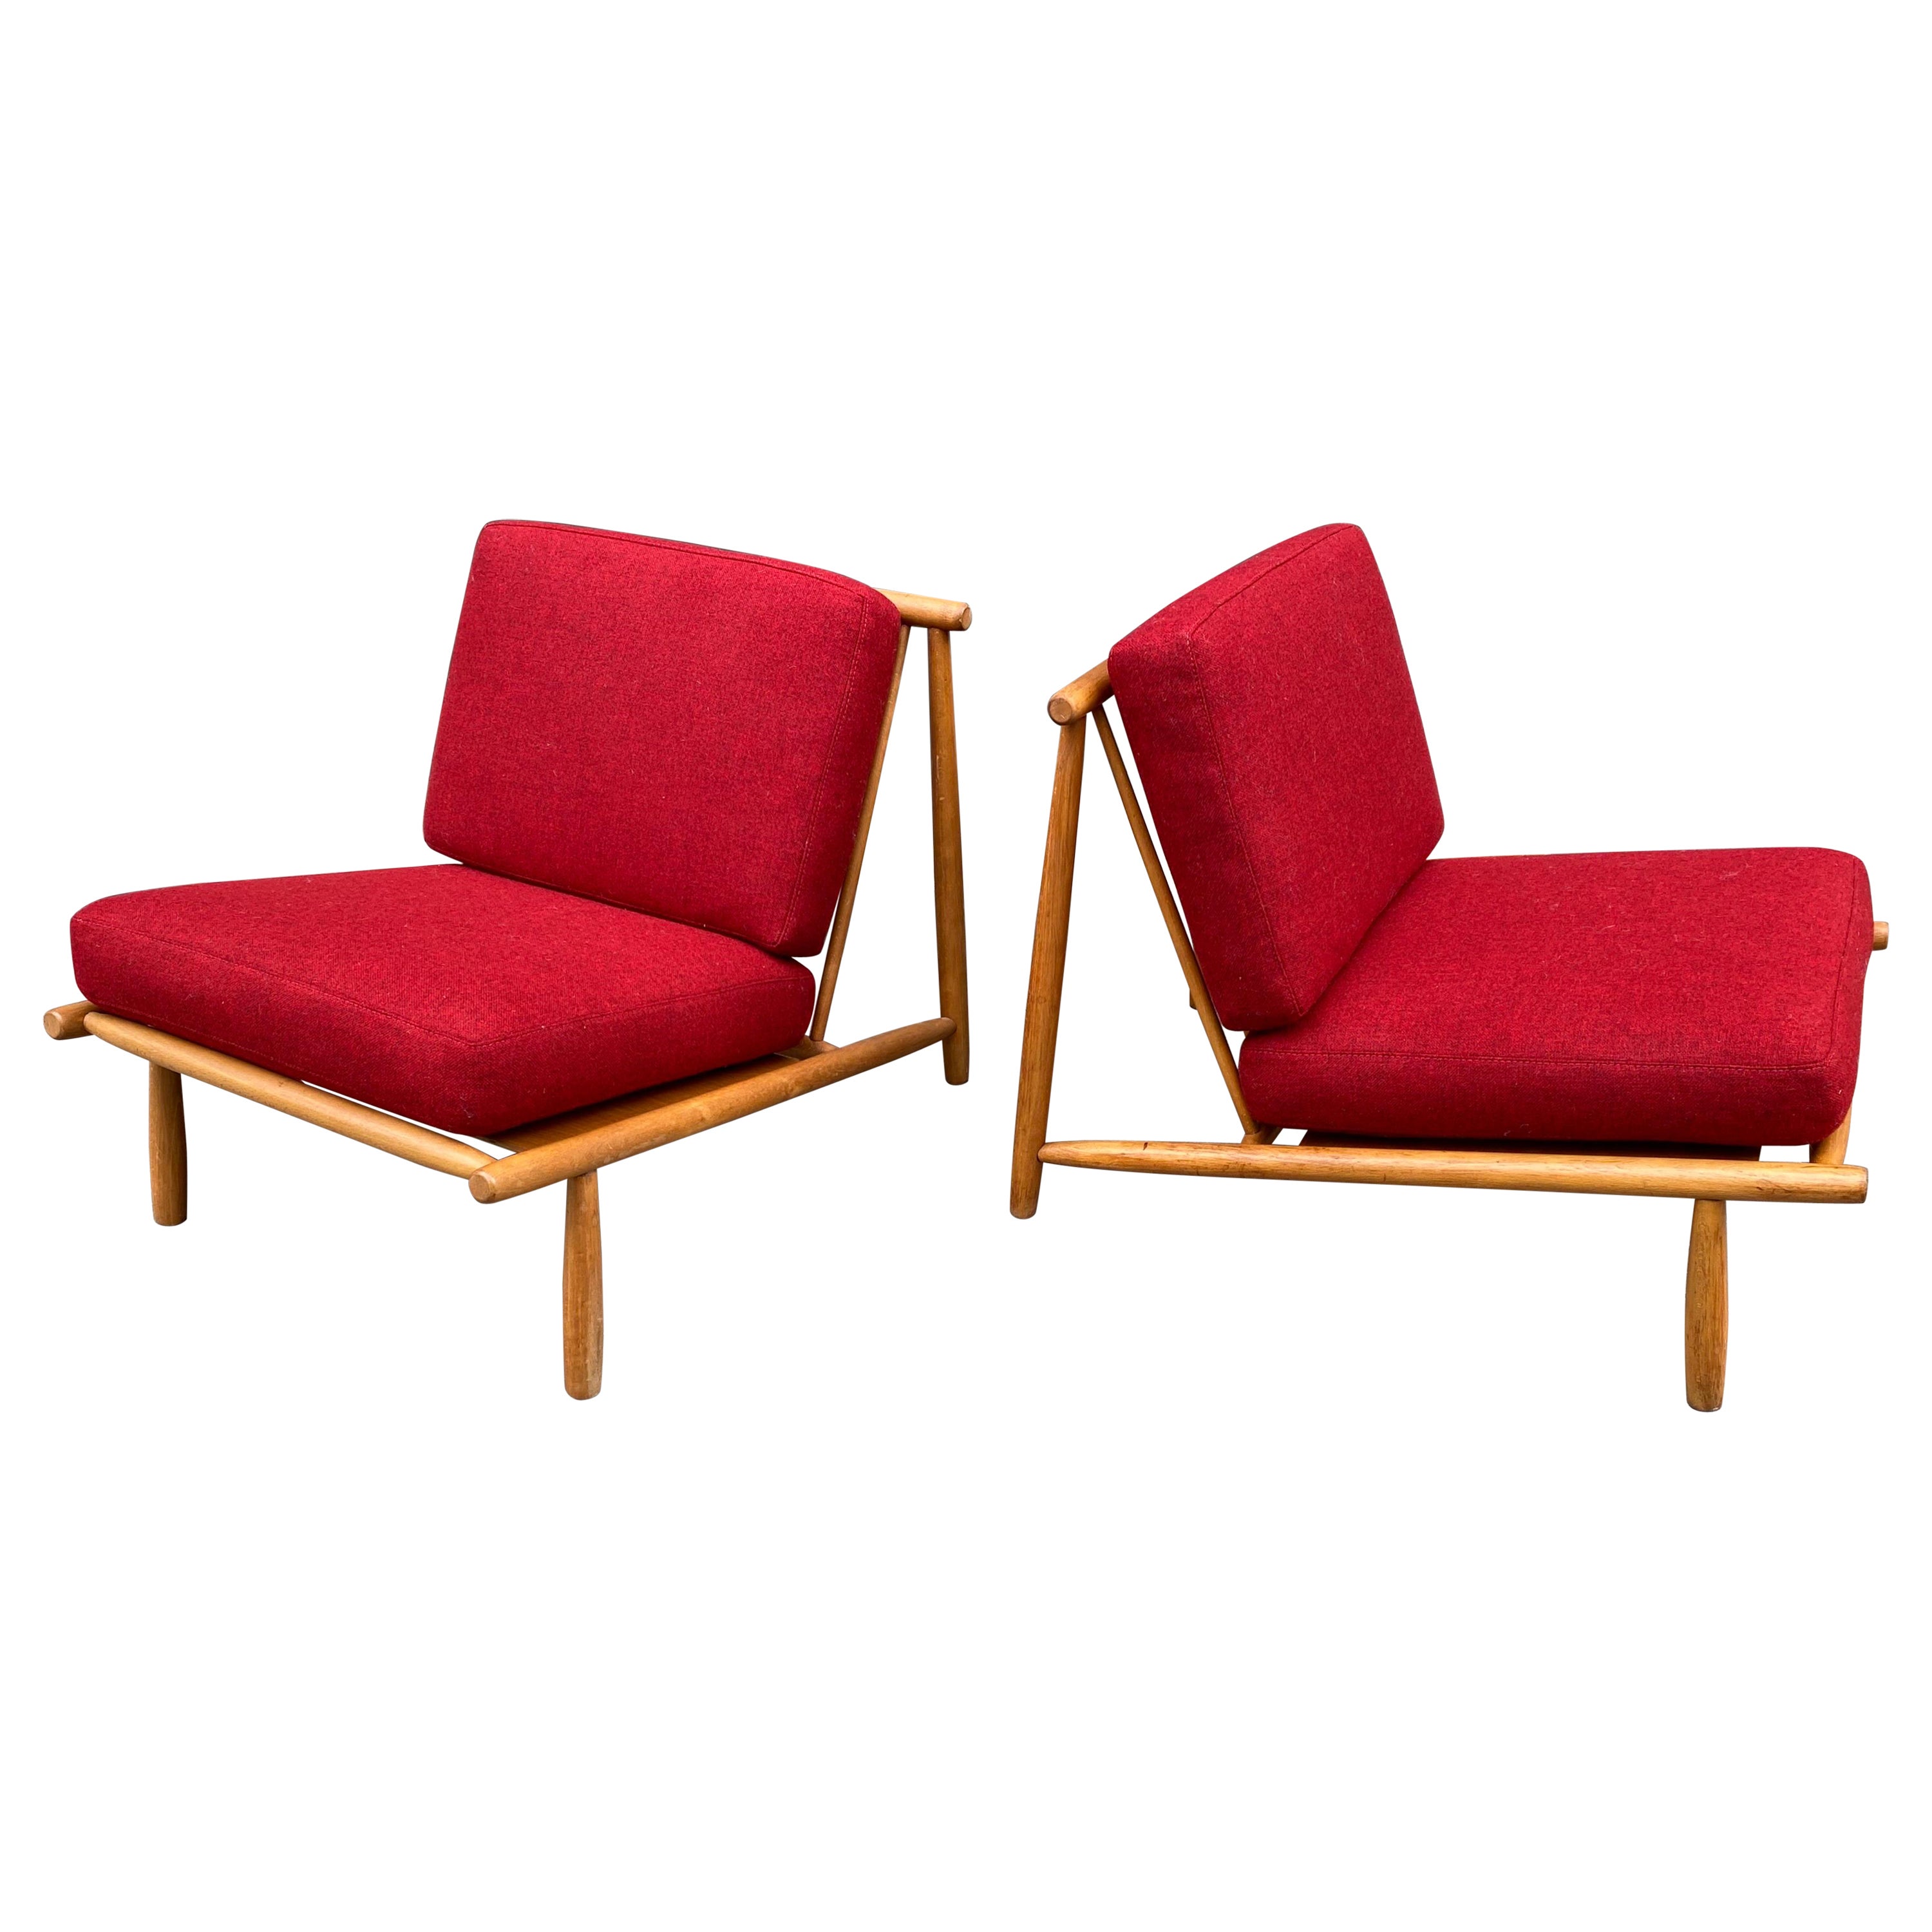 Alf Svensson “Domus” for Dux Lounge Chairs